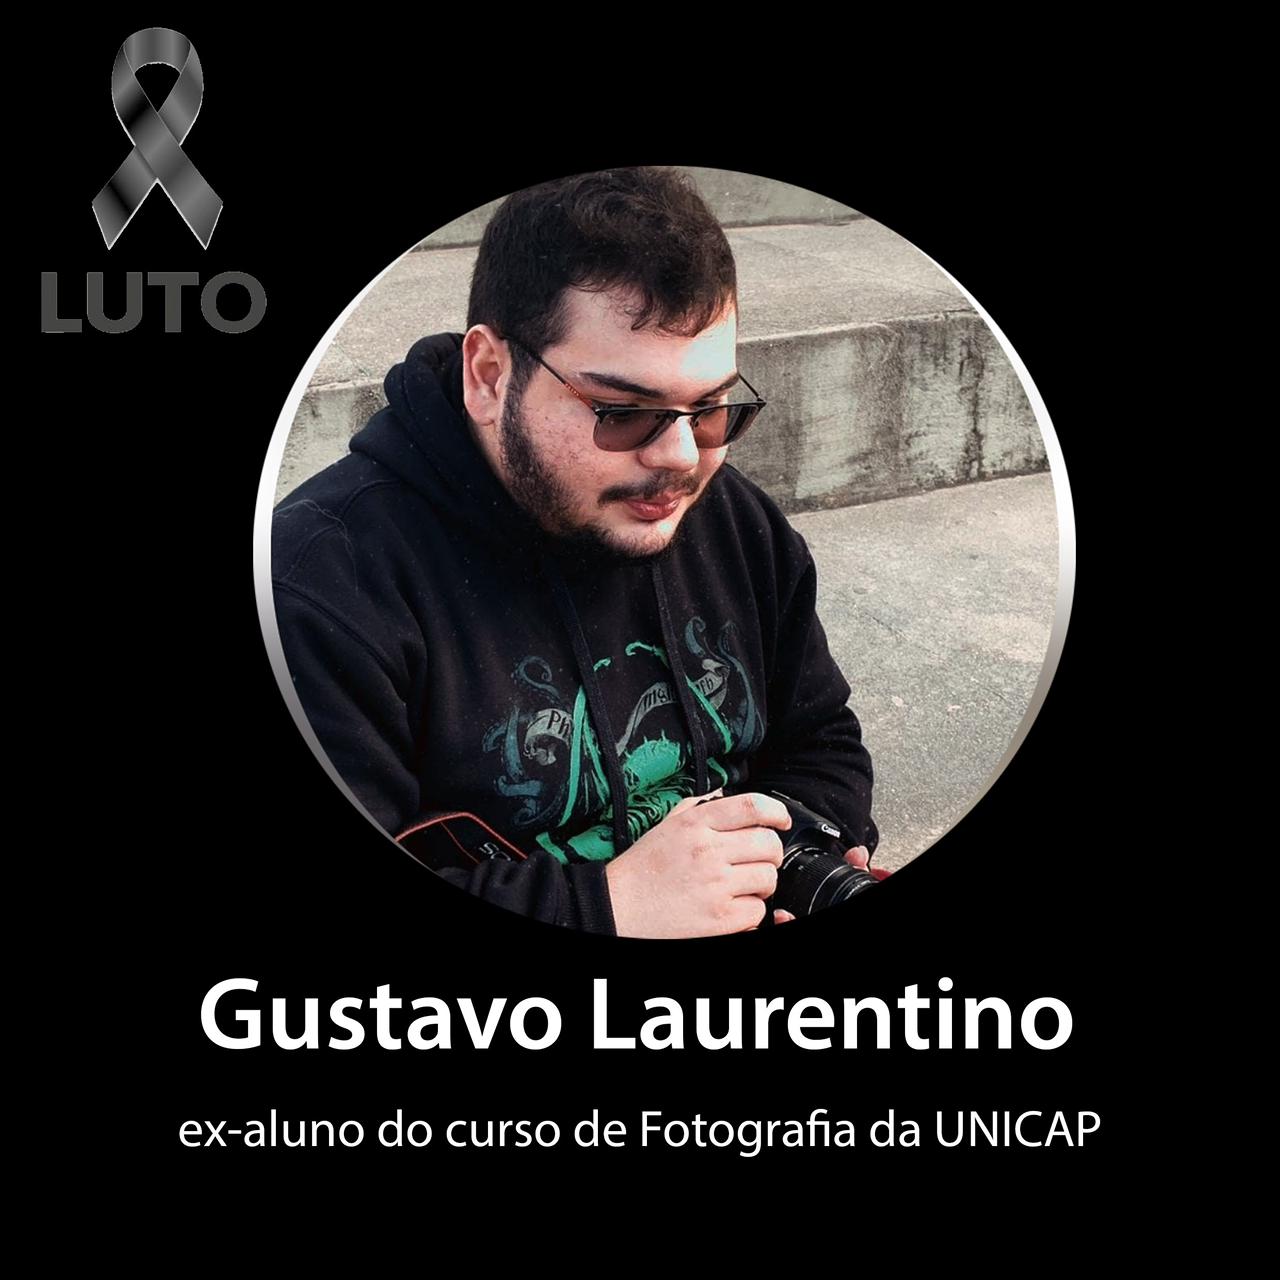 Gustavo Laurentino falecimento